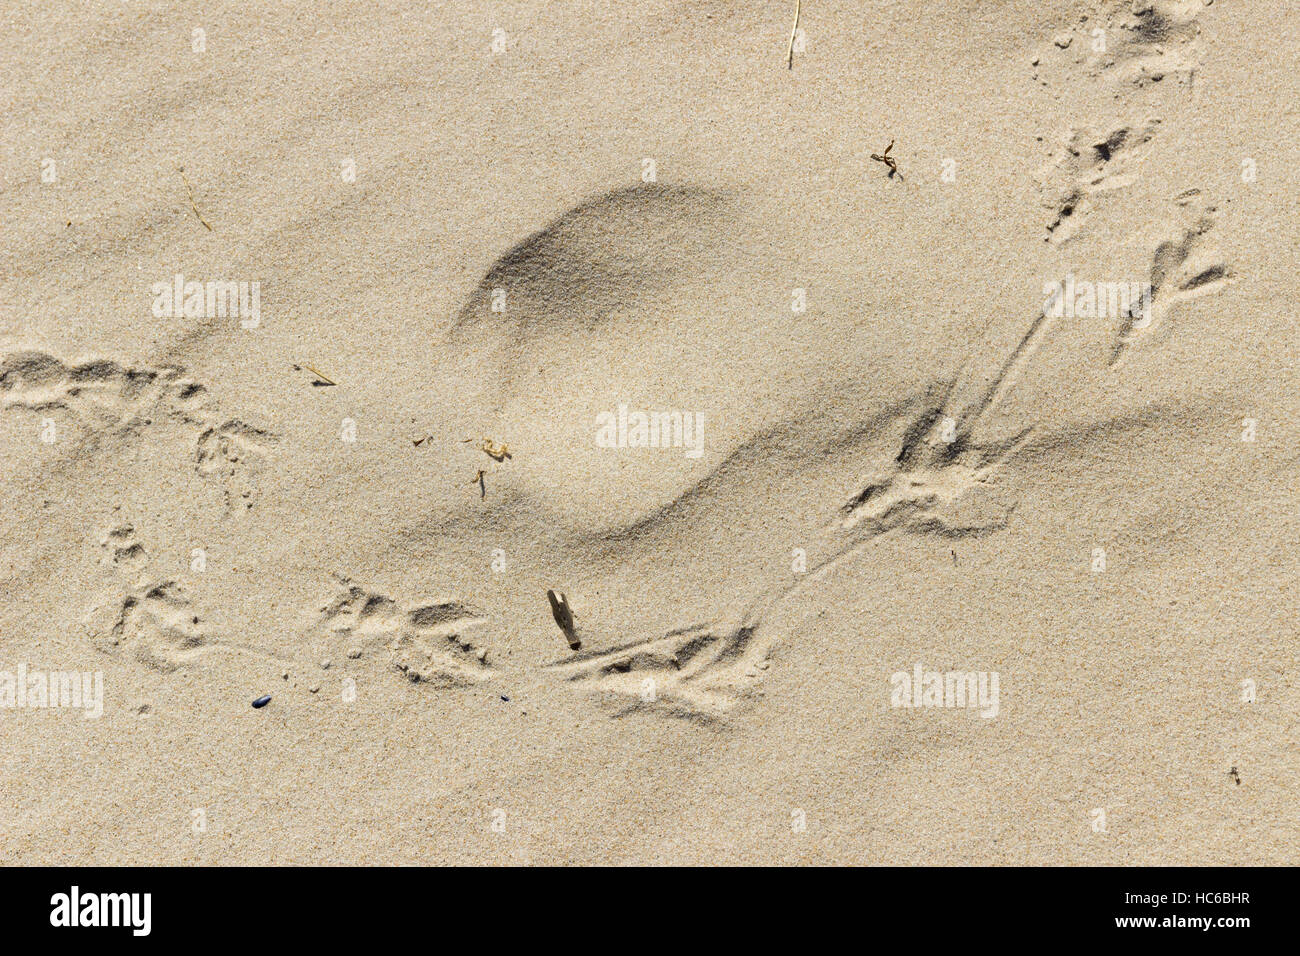 Footprints of a bird in sand on a beach Stock Photo